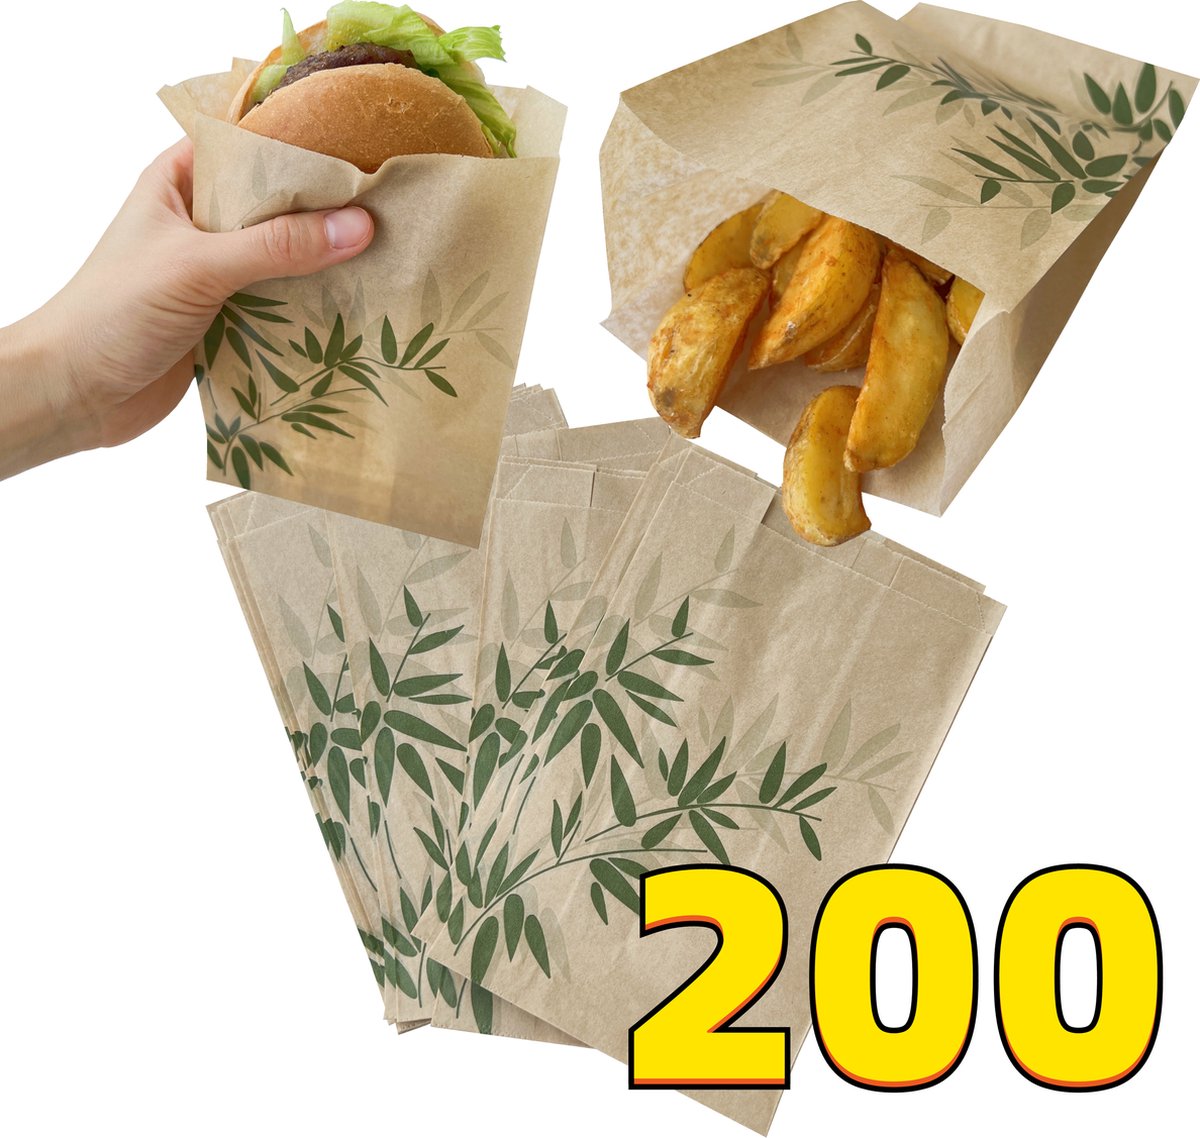 Rainbecom - 200 Stuks - Hamburger Zakje Papier - Vetvrij Papier - Papieren Zakken - Bamboe